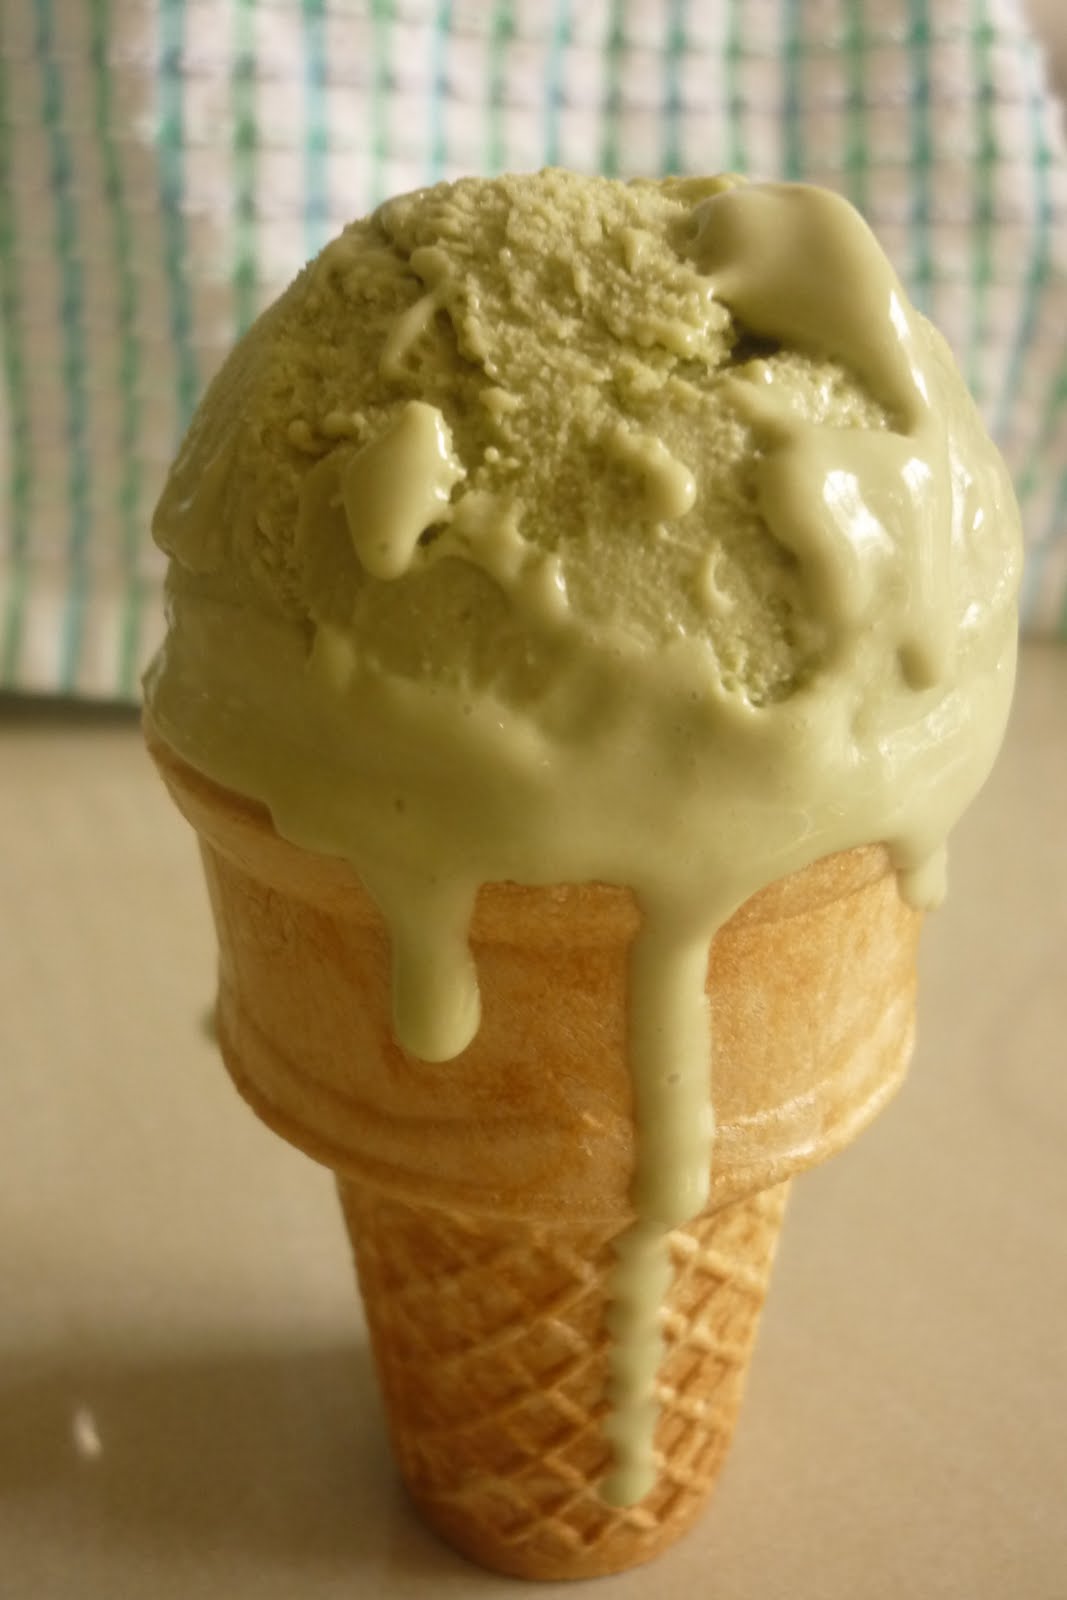 kitchen flavours: Green Tea Ice Cream